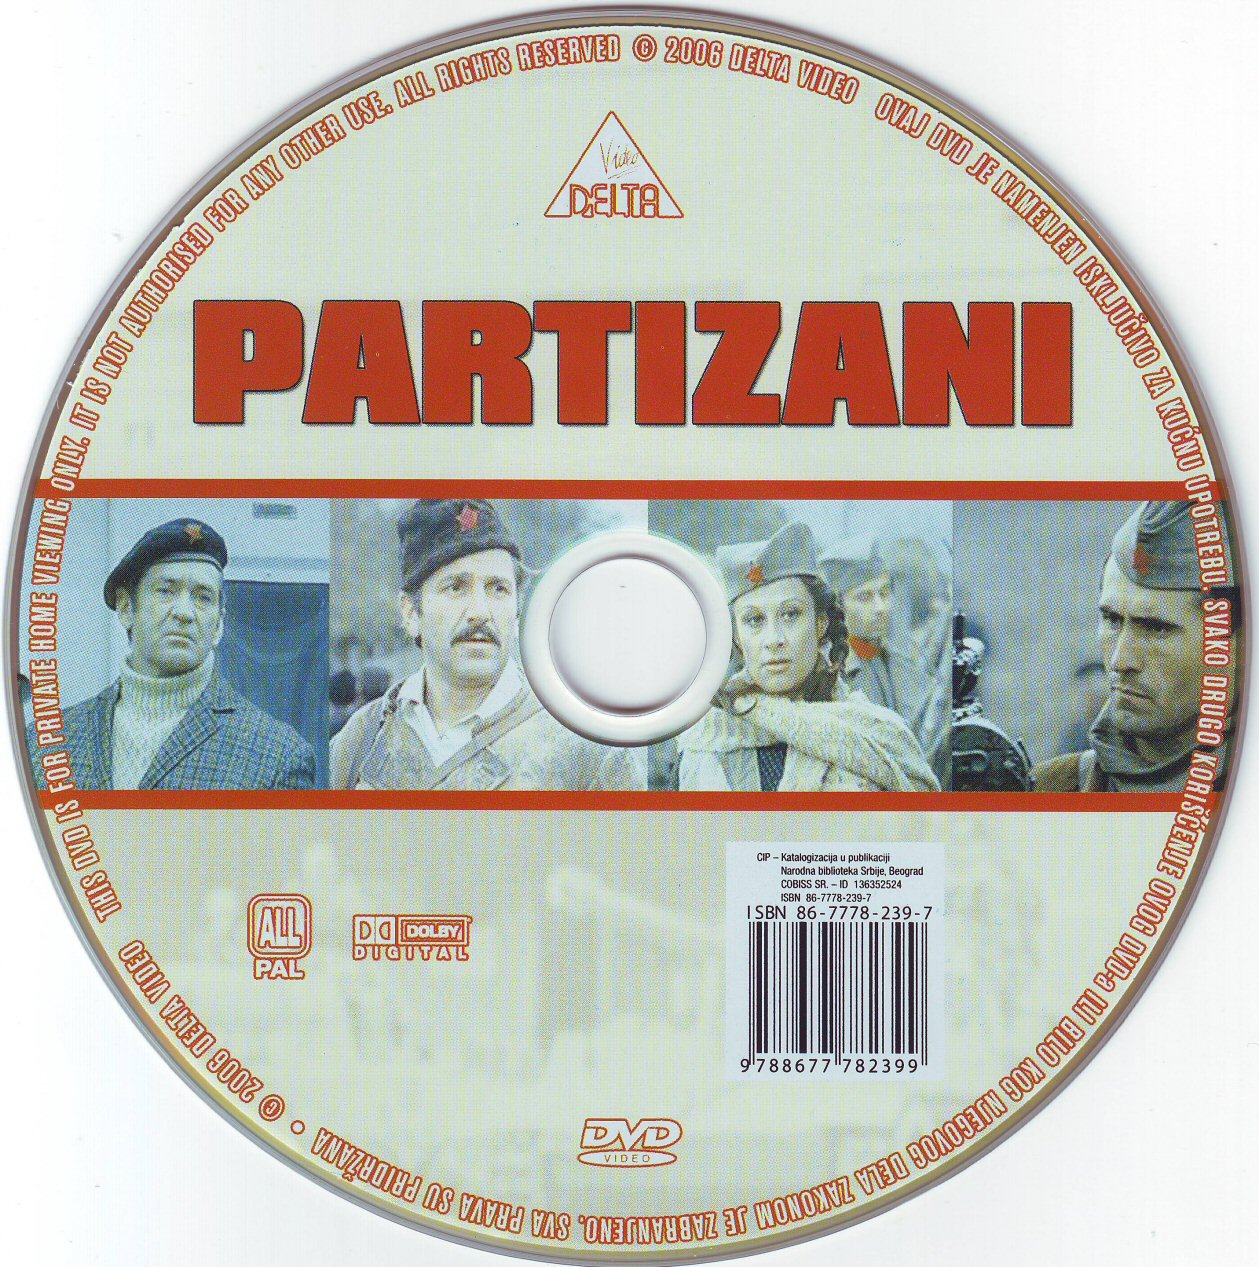 Click to view full size image -  DVD Cover - P - DVD - PARTIZANI - CD - DVD - PARTIZANI - CD.jpg